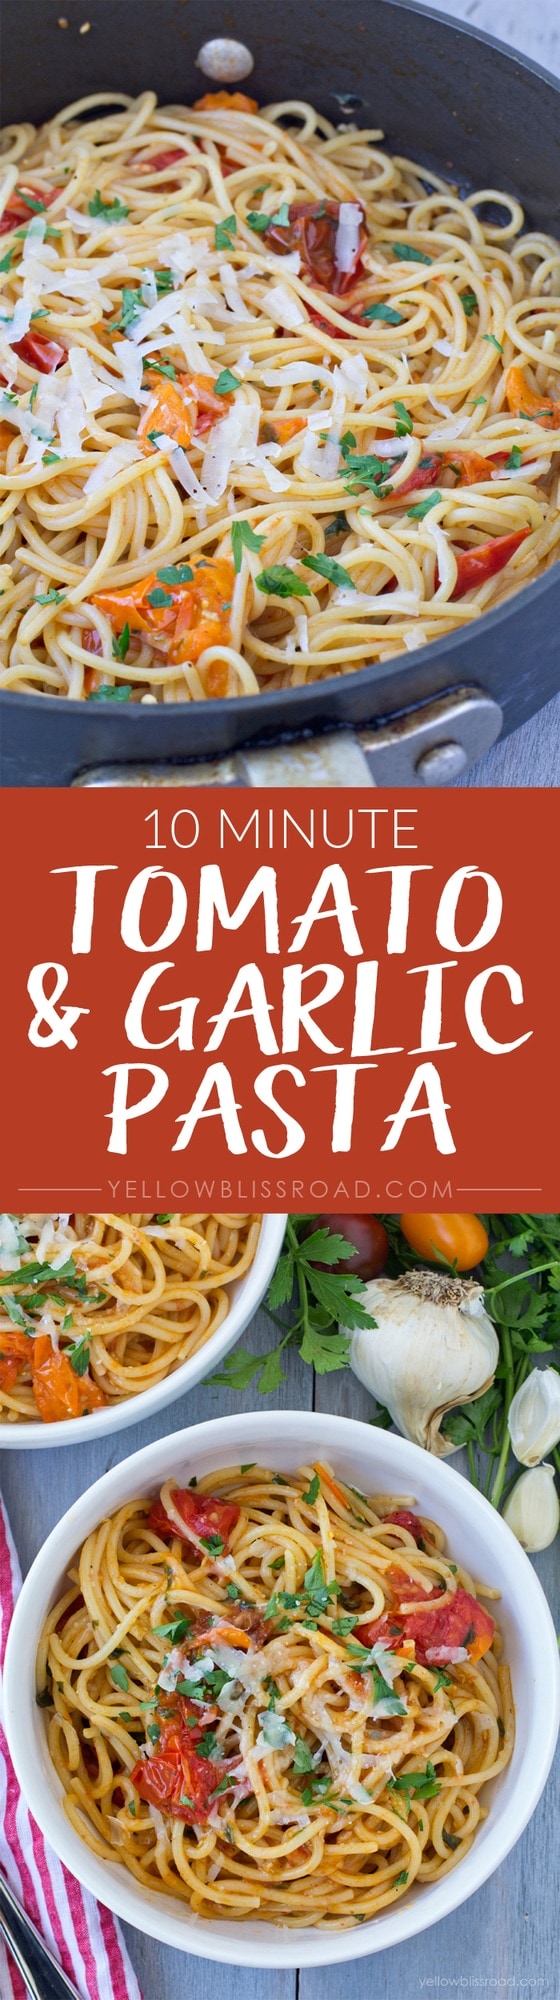 10 Minute Tomato and Garlic Pasta